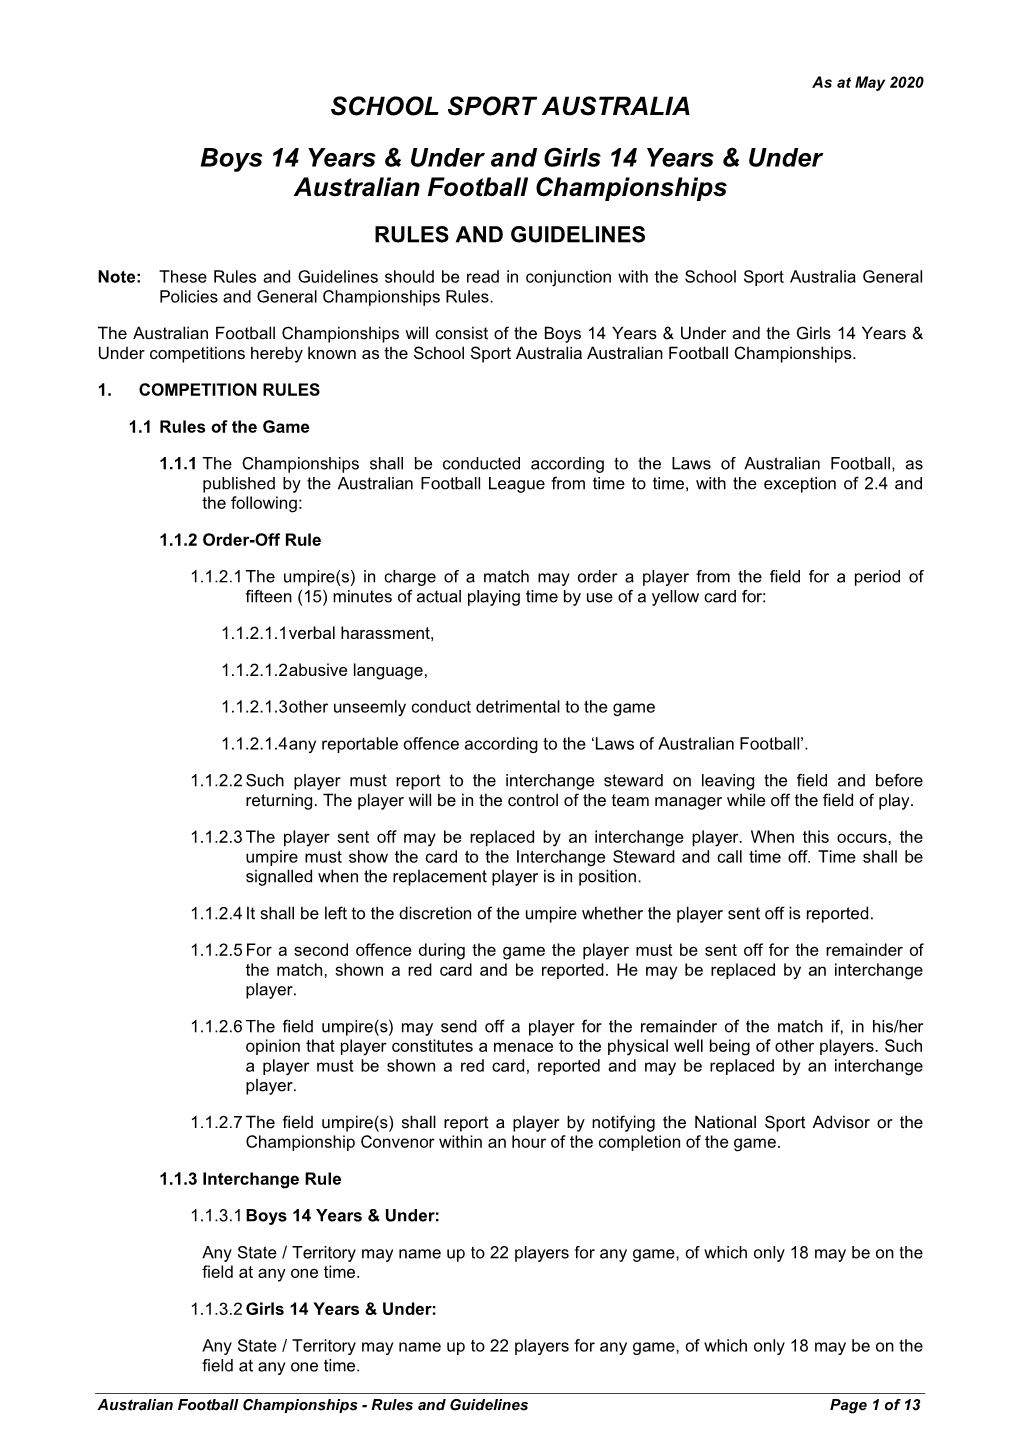 Australian Football Rules & Guidelines